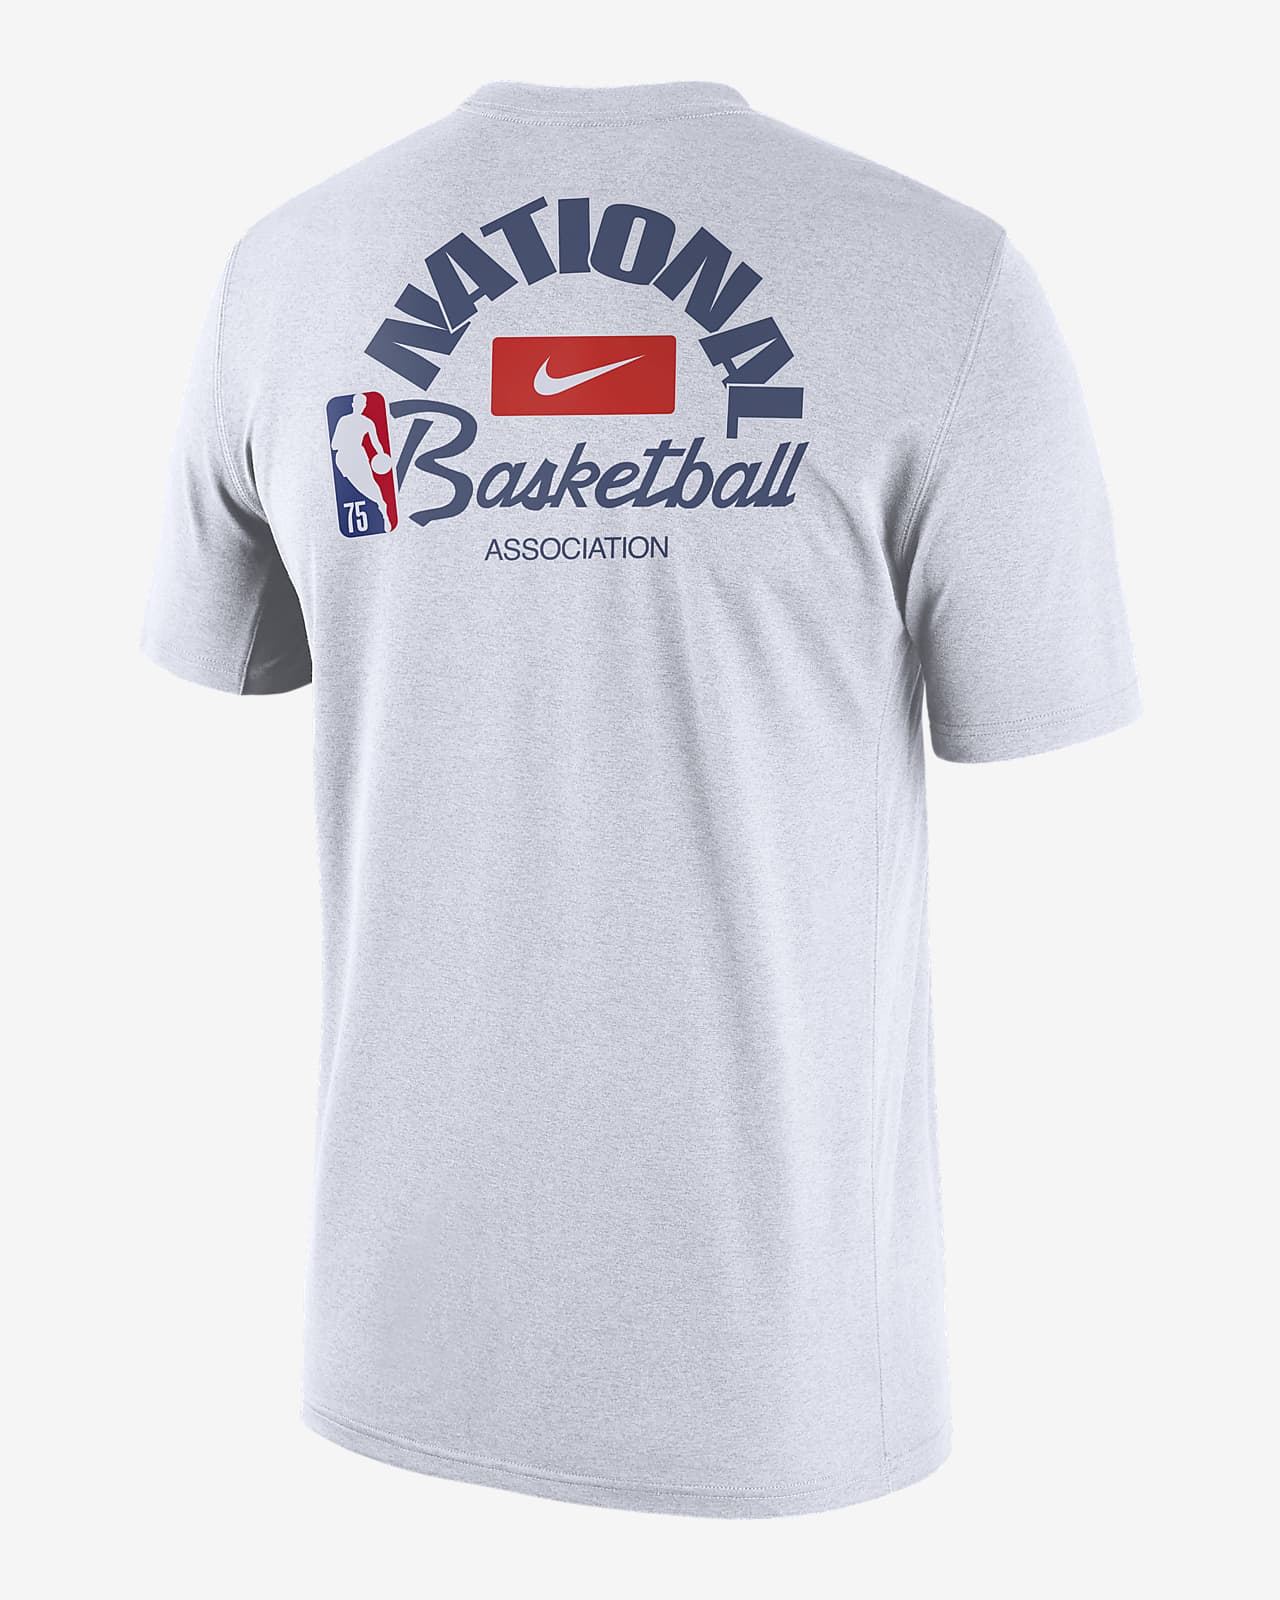 Berucht titel overal Team 31 Courtside Men's Nike NBA T-Shirt. Nike.com